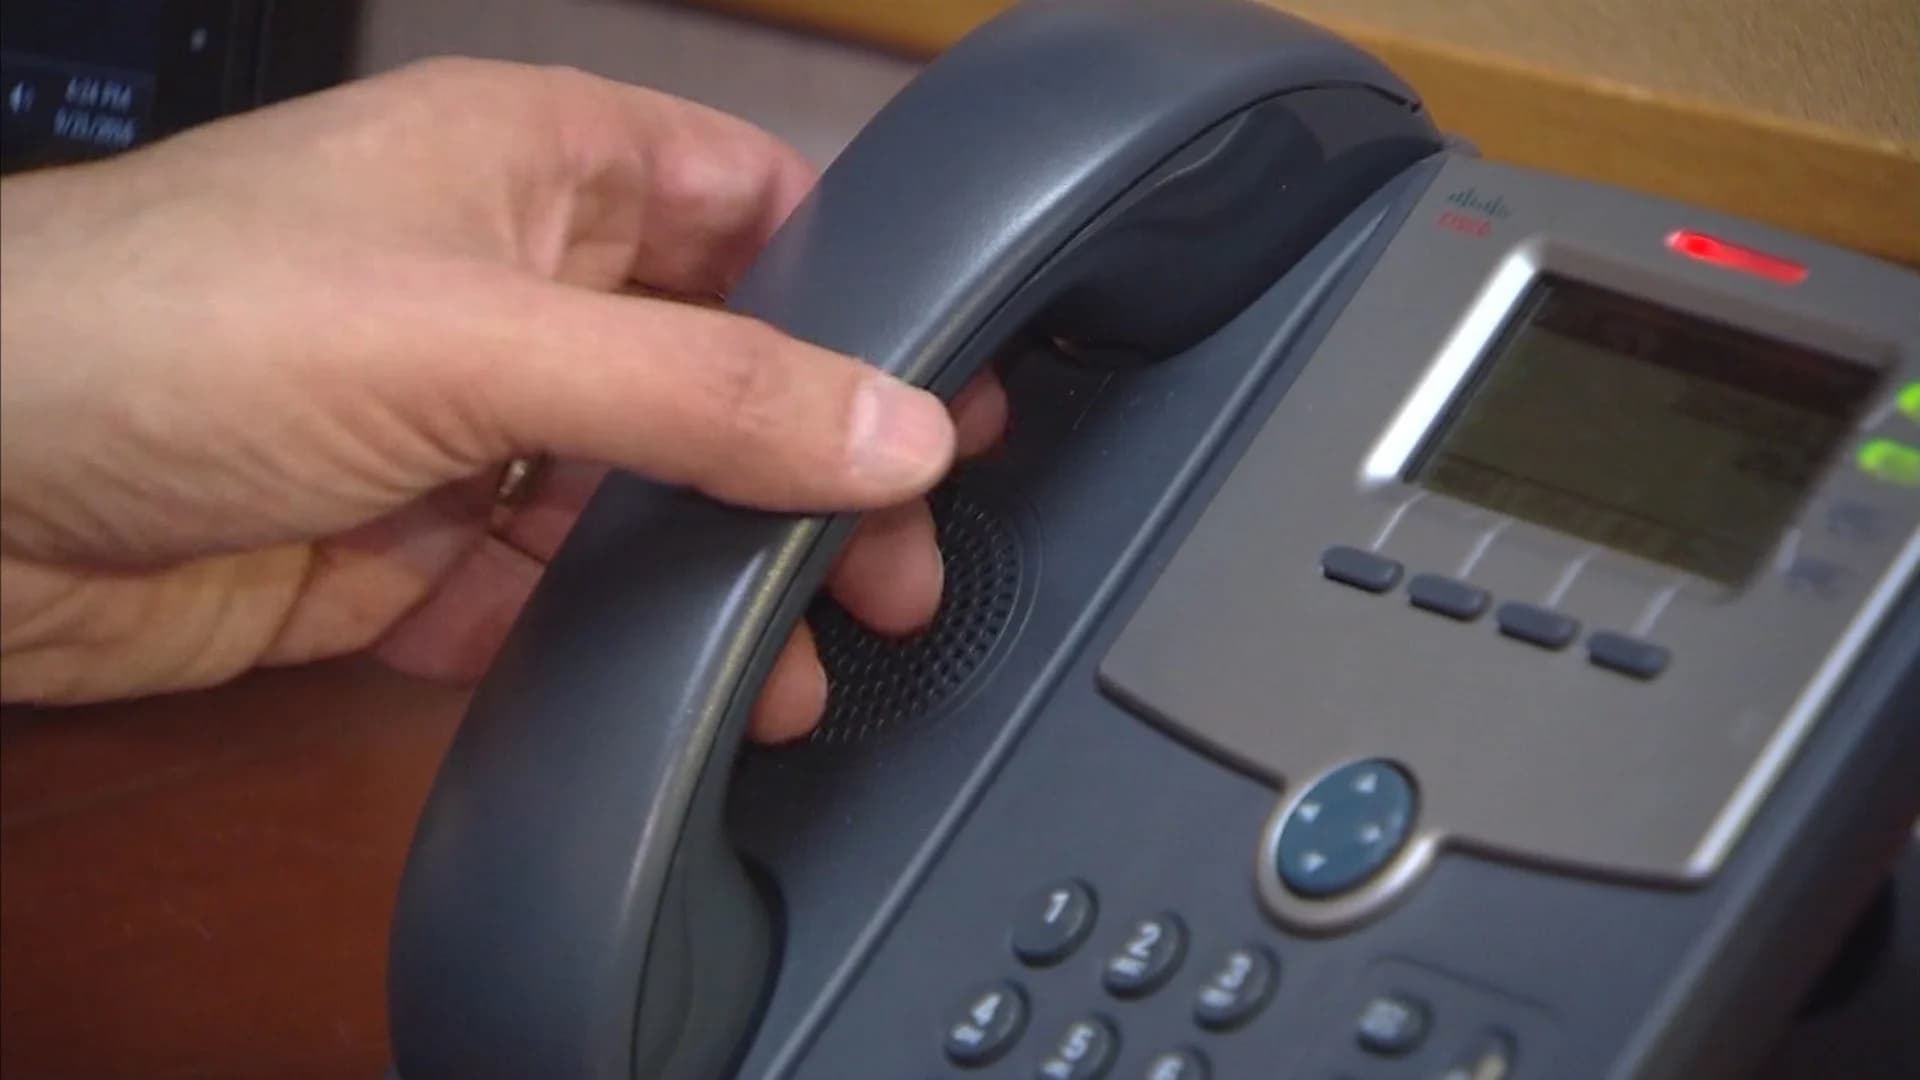 Consumer Alert: Reports of telephone scam remain unproven